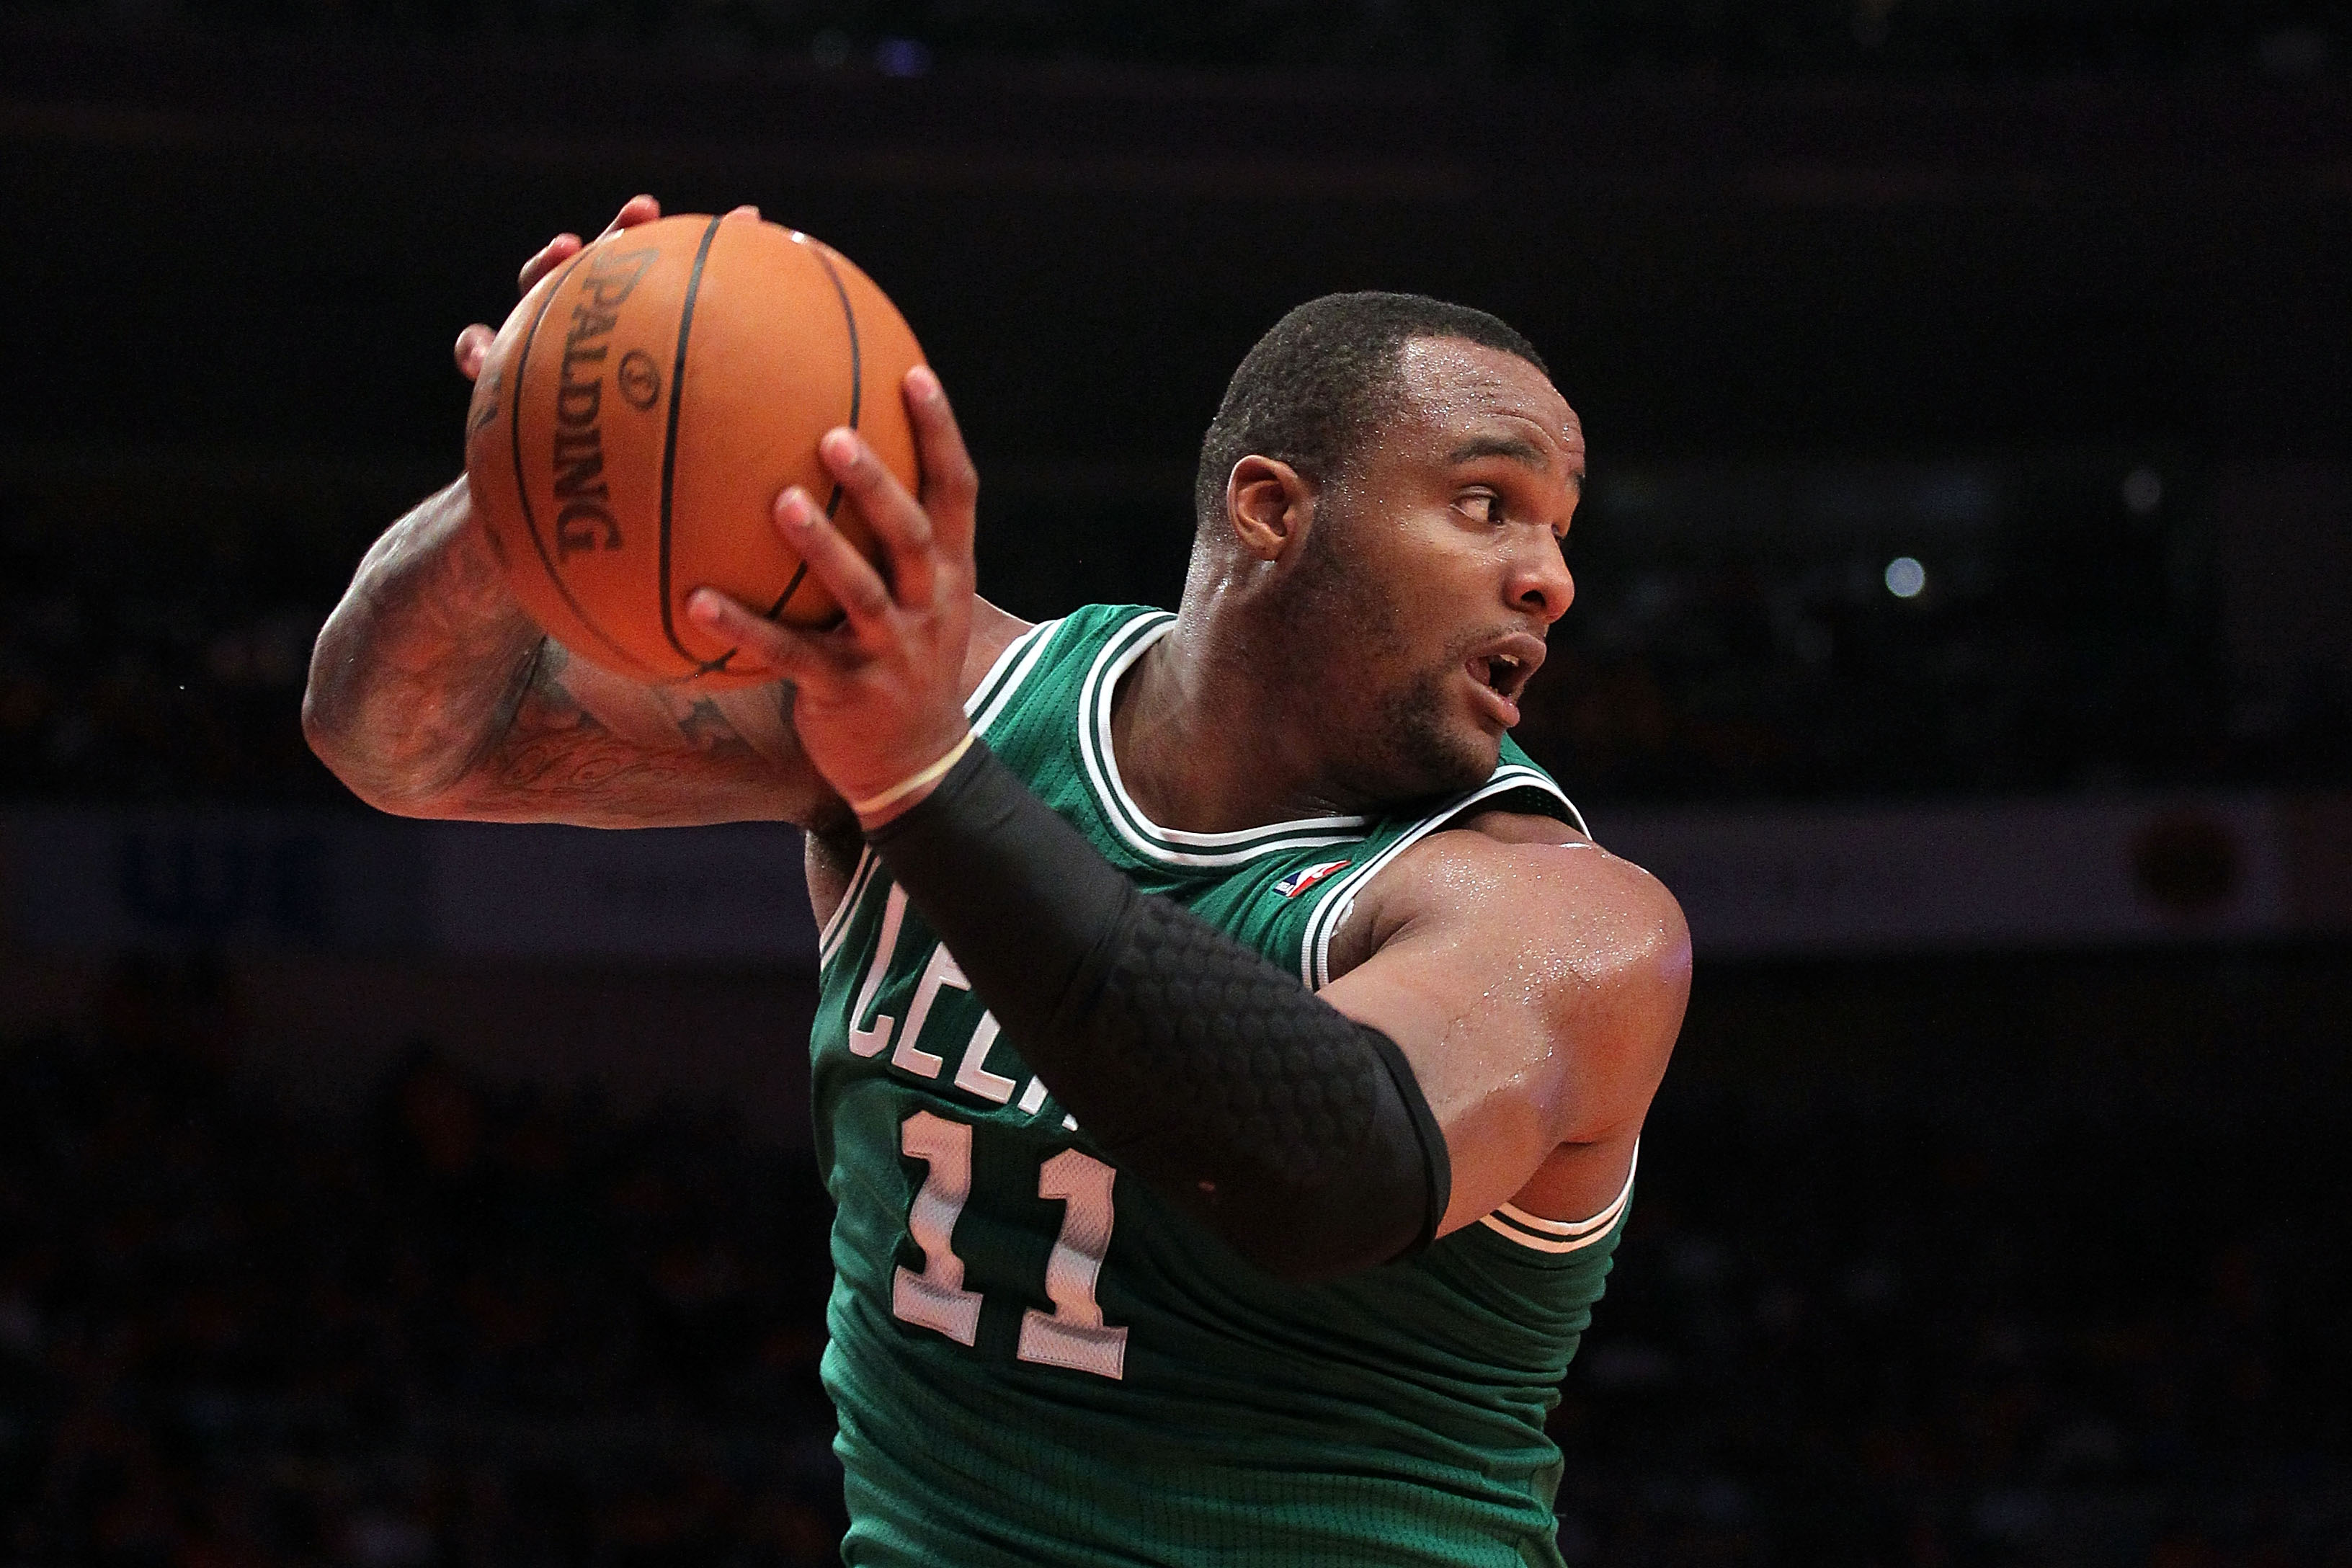 Glen Davis of the Boston Celtics controls a rebound against the New York Knicks.